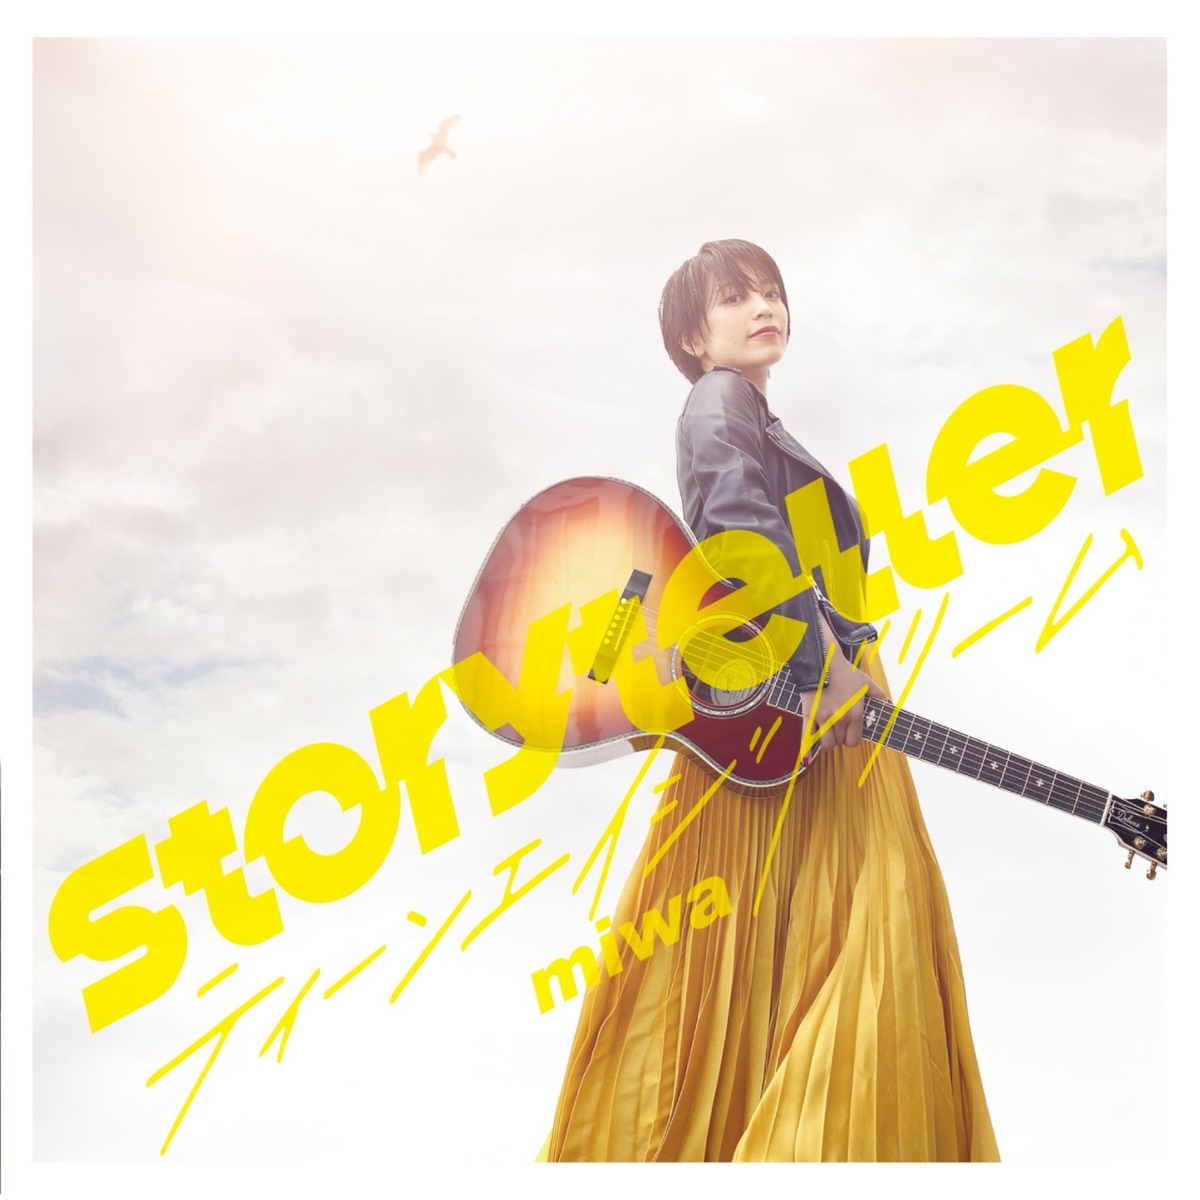 Storyteller / Teenage Dream - EP - Album by miwa - Apple Music